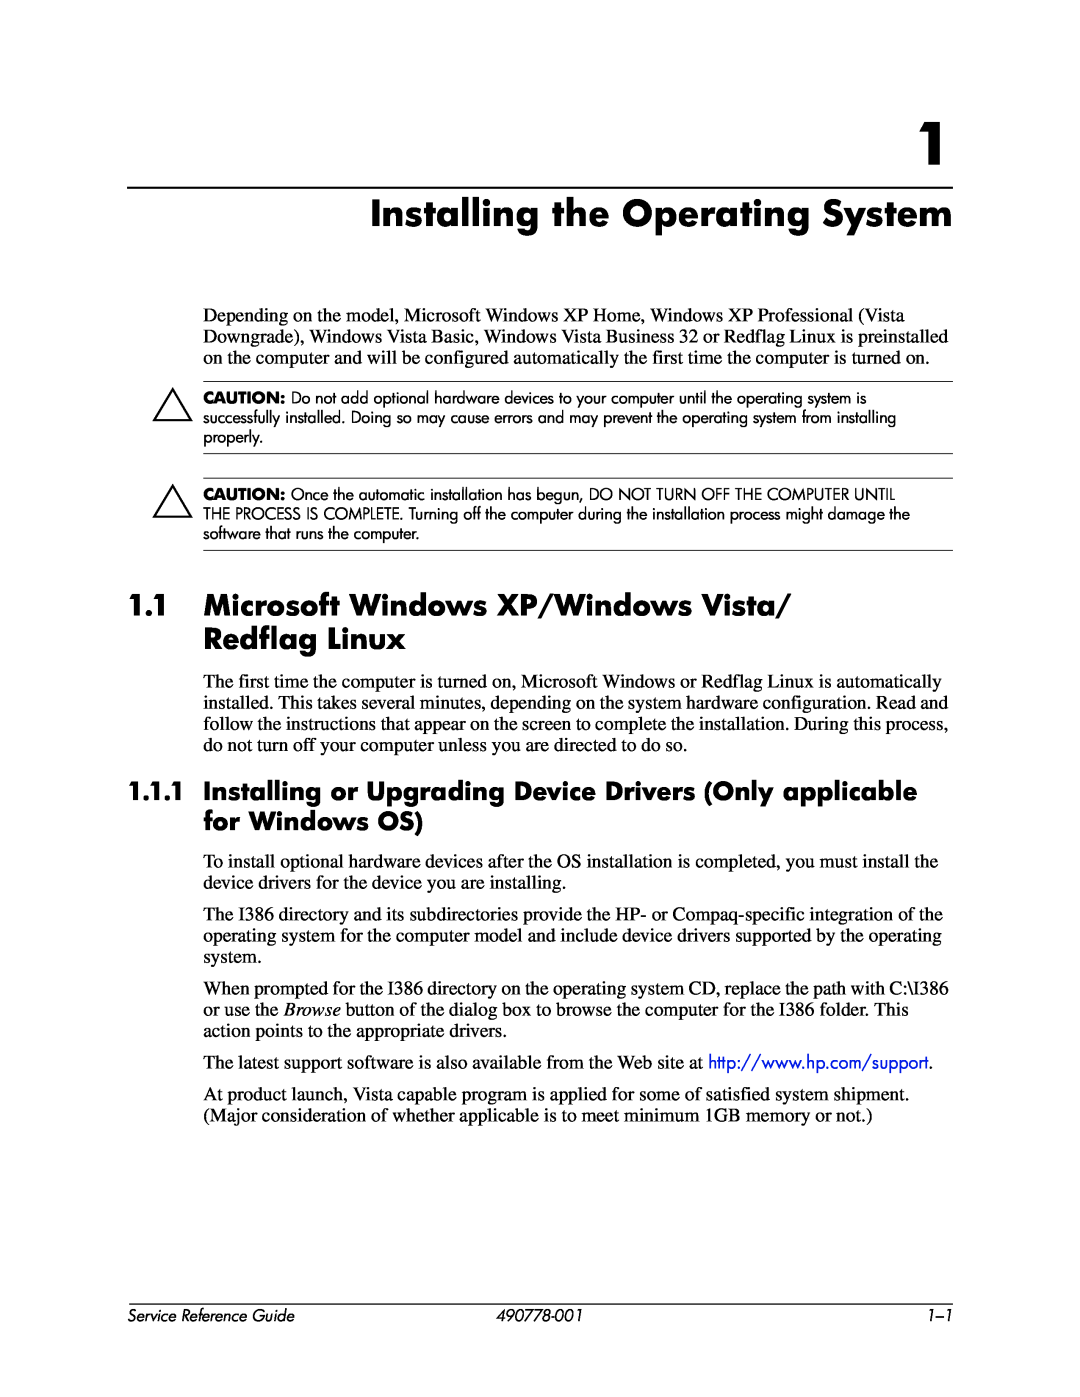 HP dx2310 manual Installing the Operating System, Microsoft Windows XP/Windows Vista/ Redflag Linux 